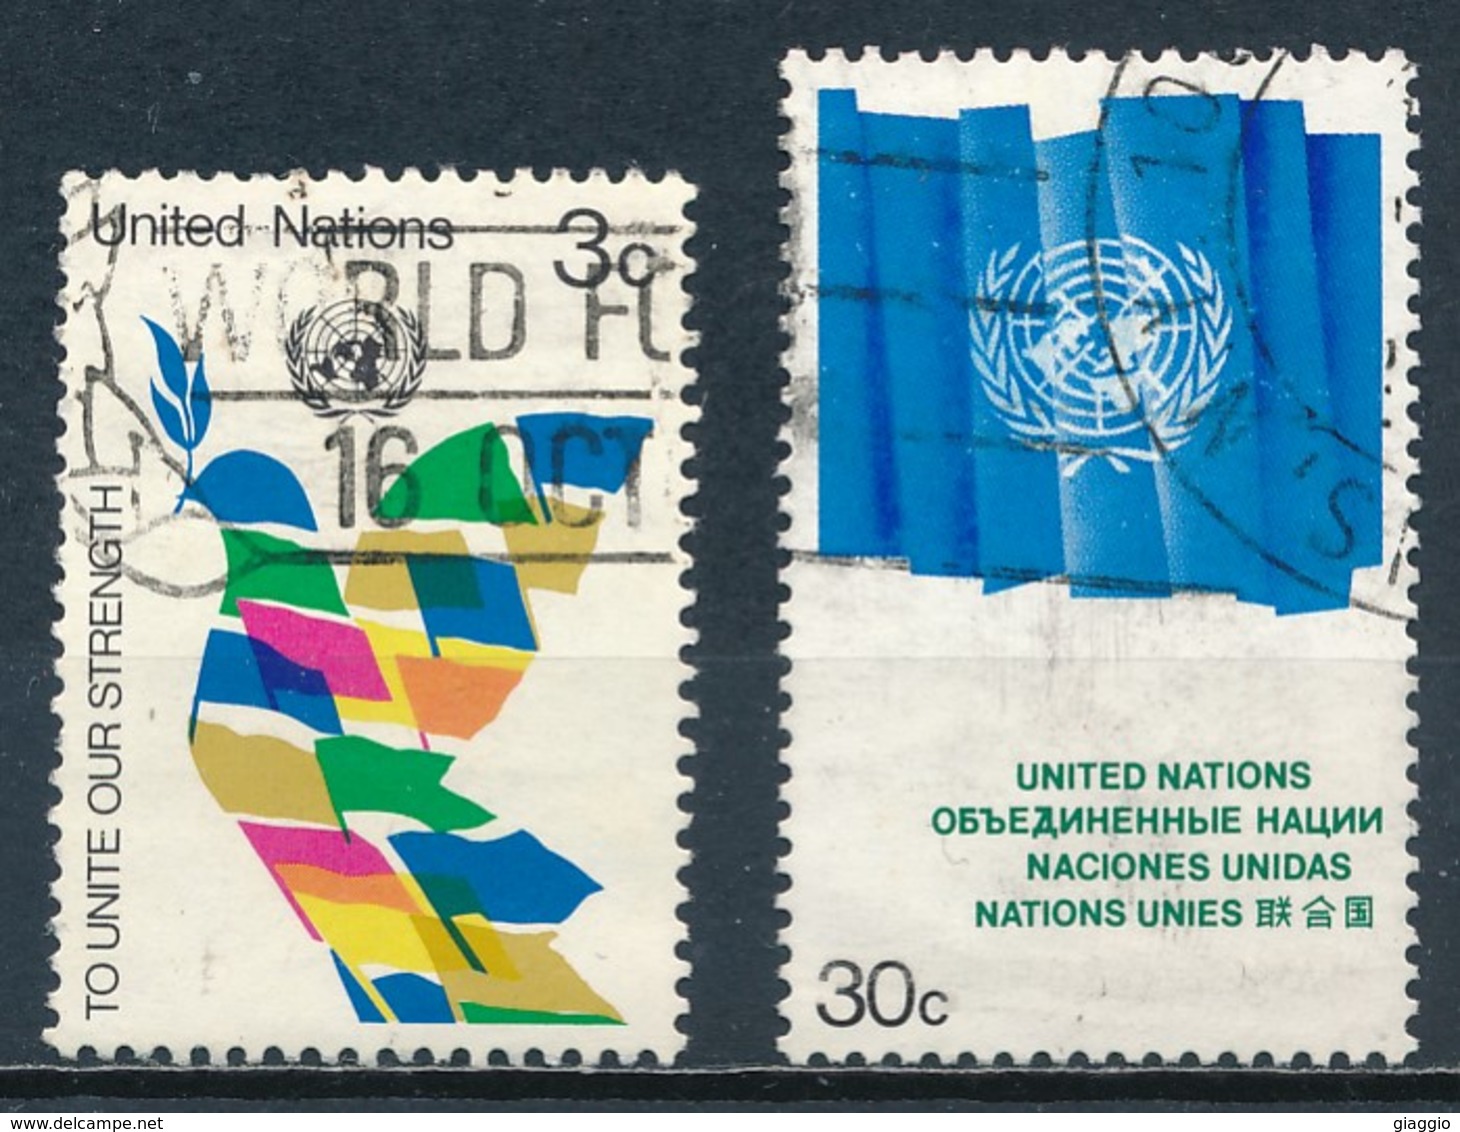 °°° ONU NEW YORK - Y&T N°259/61 - 1976 °°° - Oblitérés